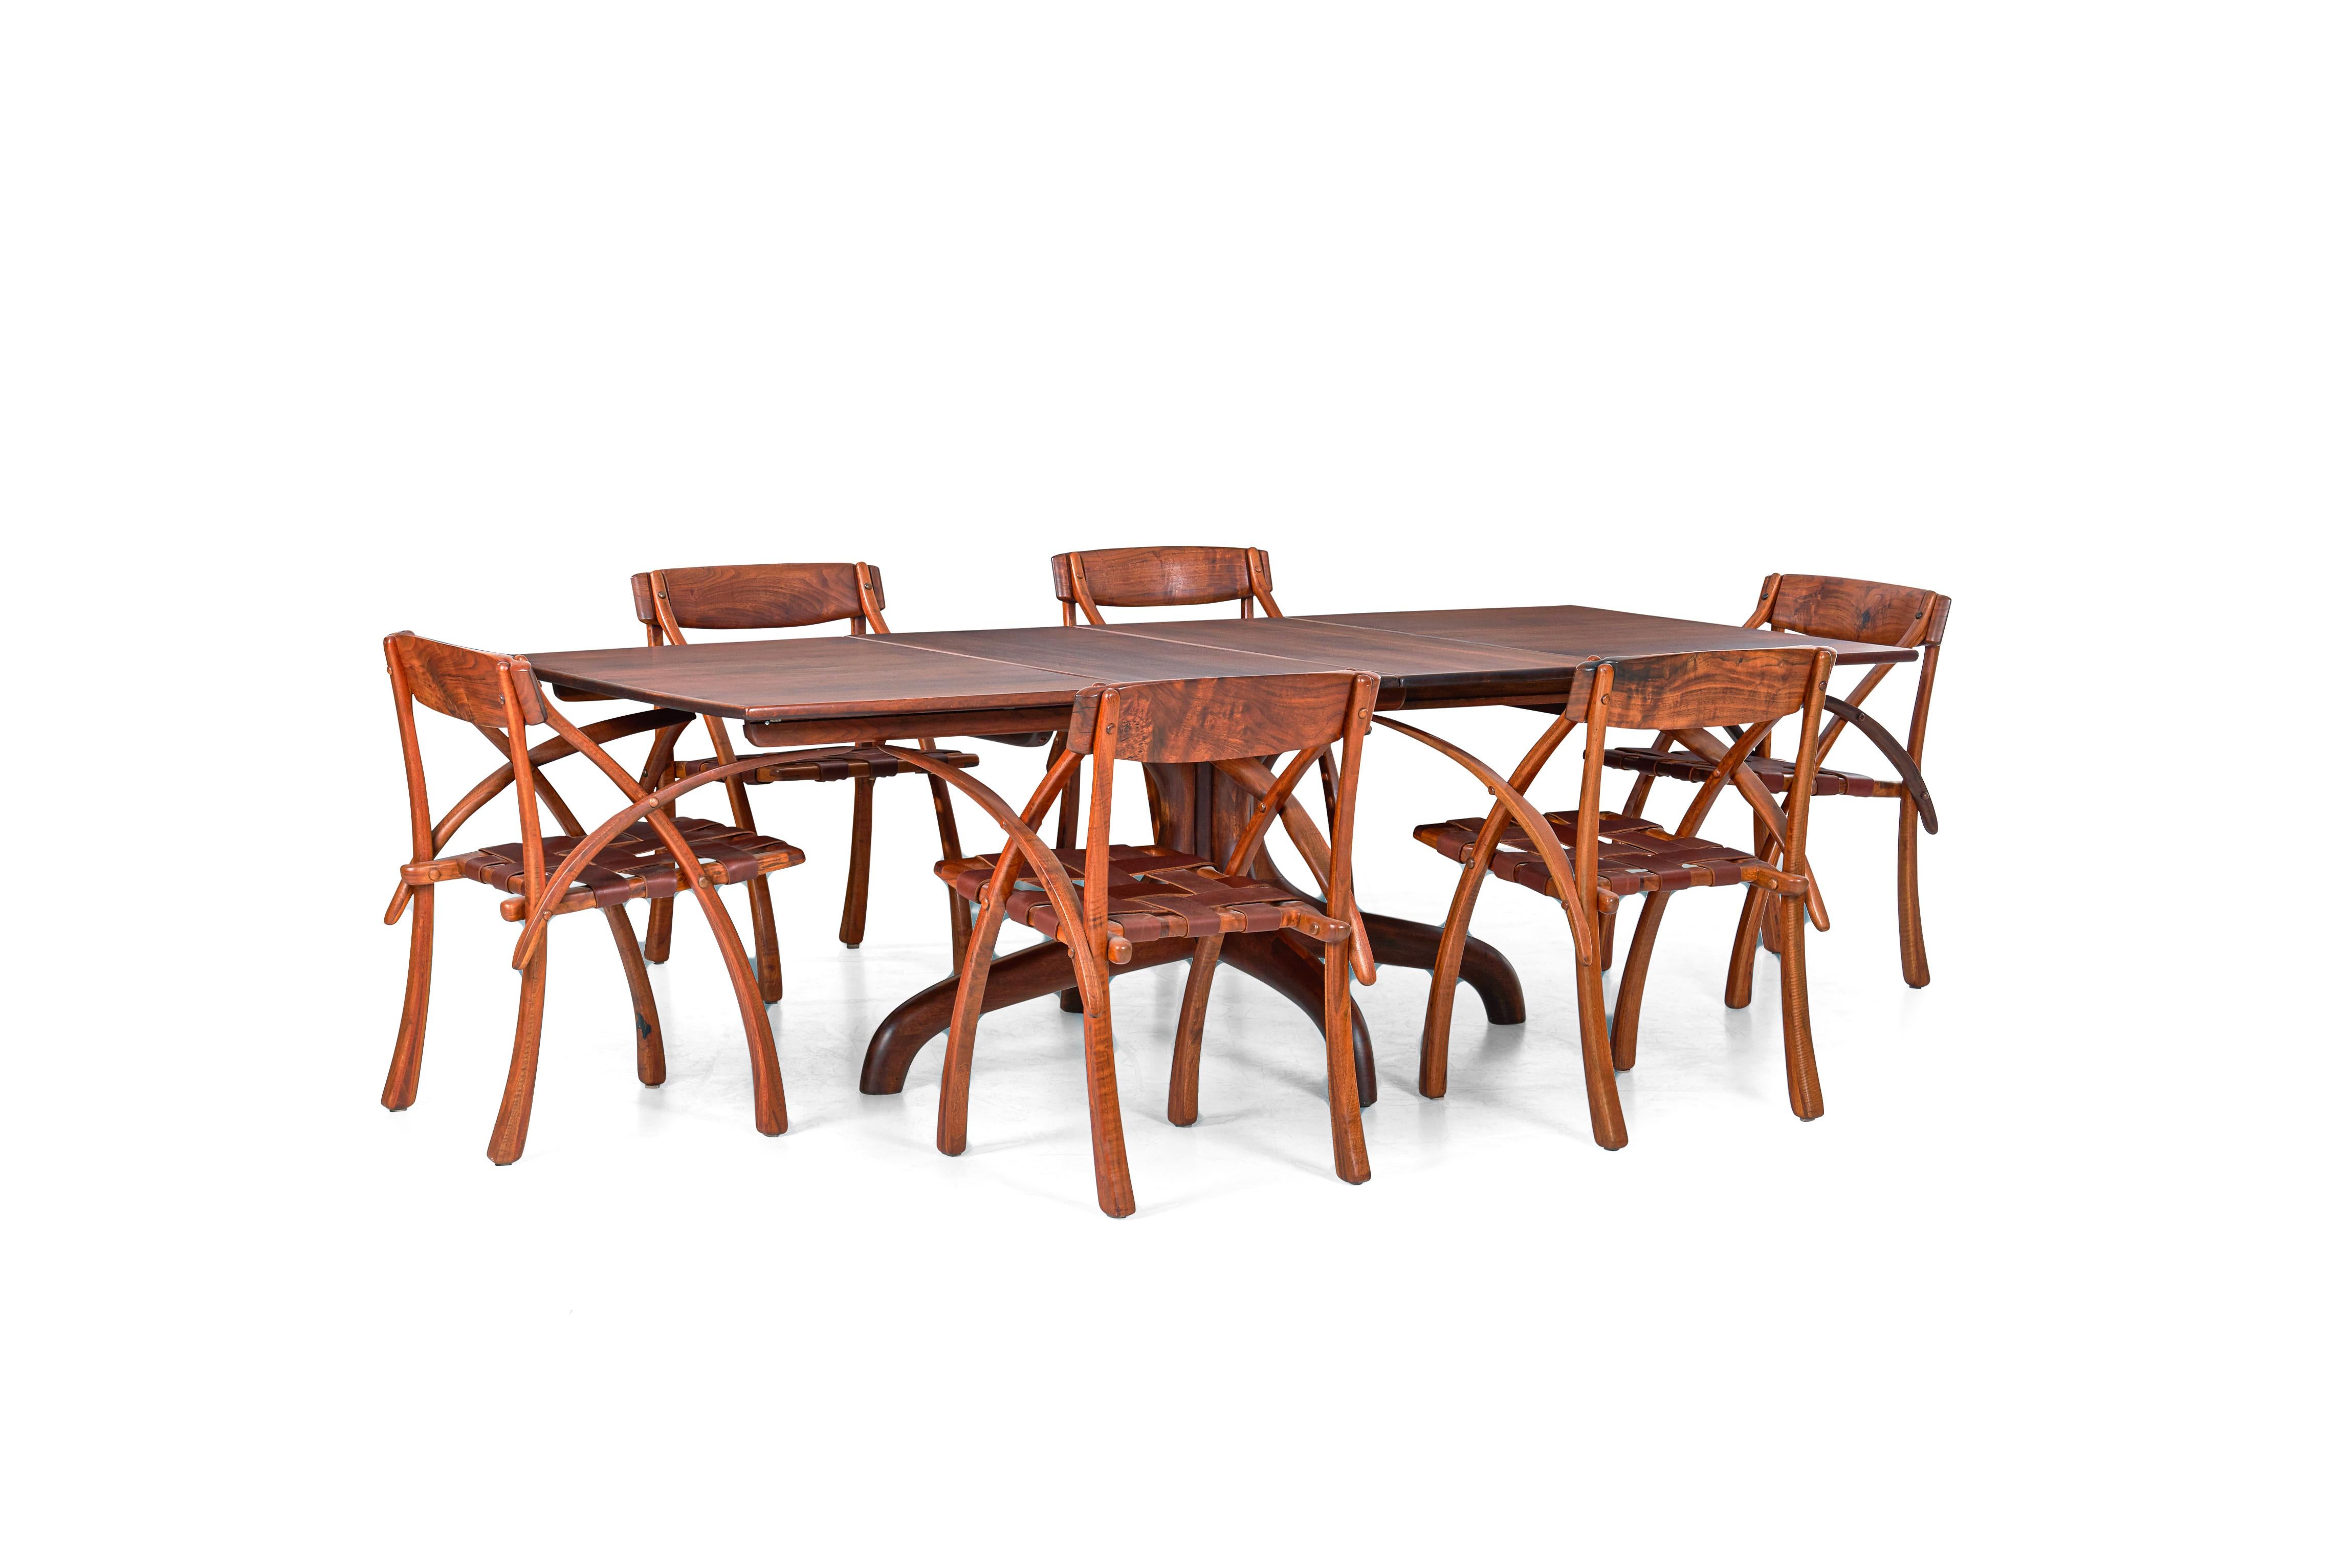 American Craftsman Arthur Espenet Carpenter Dining Table For Sale